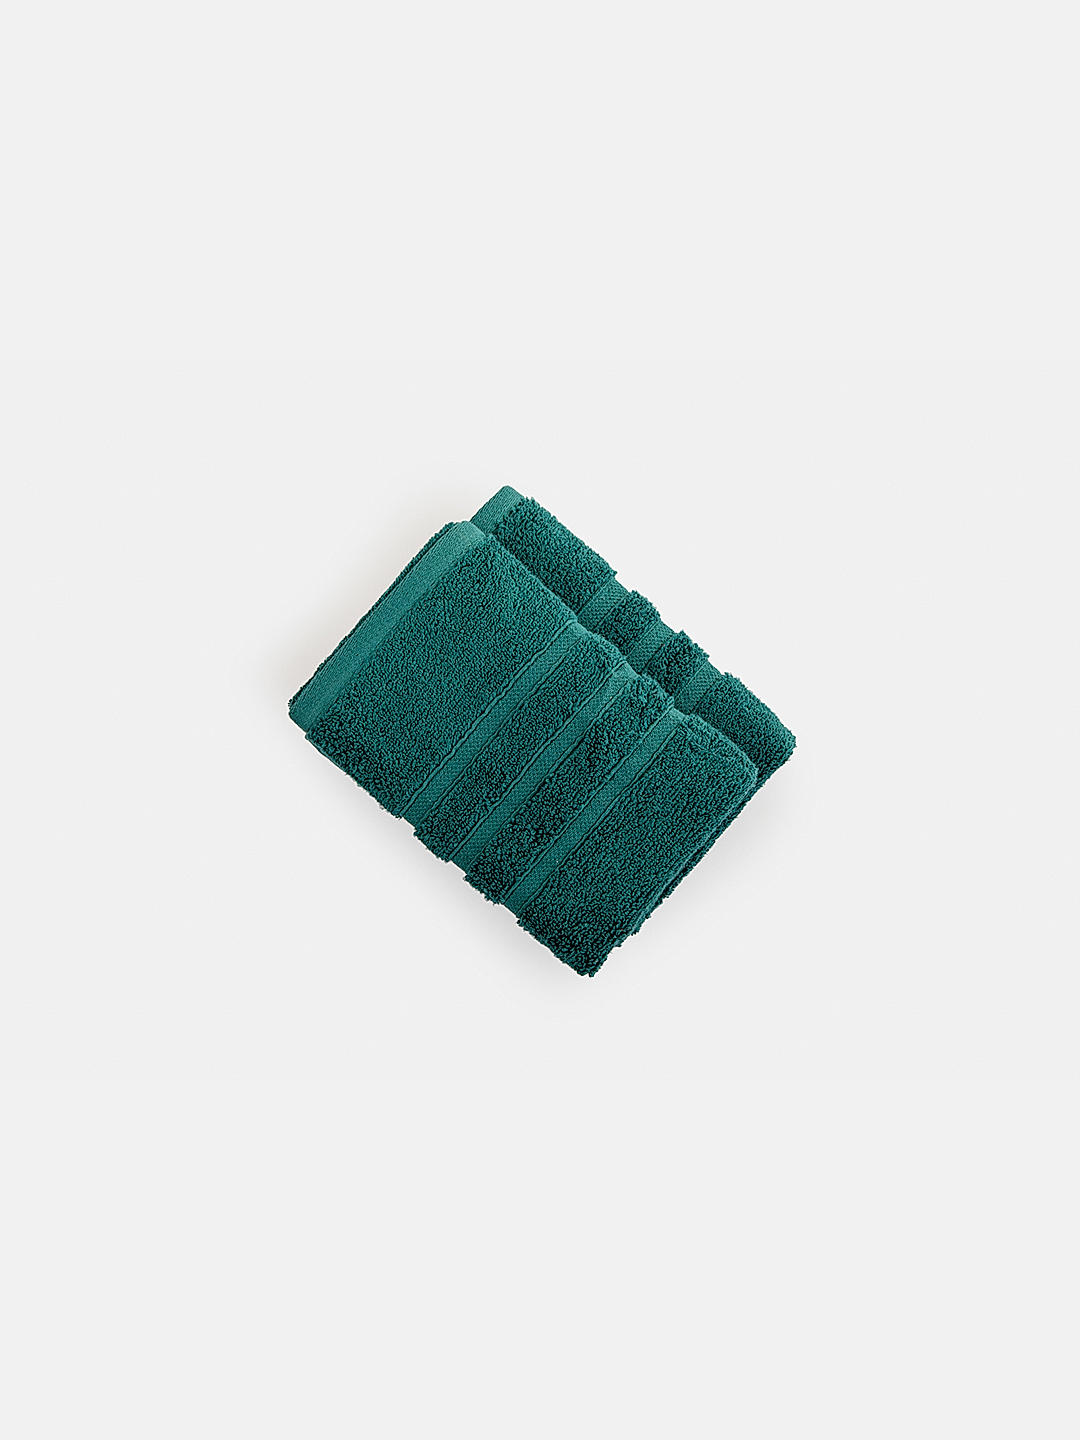 Kalpavriksha 550 gsm 100% Organic Cotton Soft & Fluffy Green Colored Hand Towel